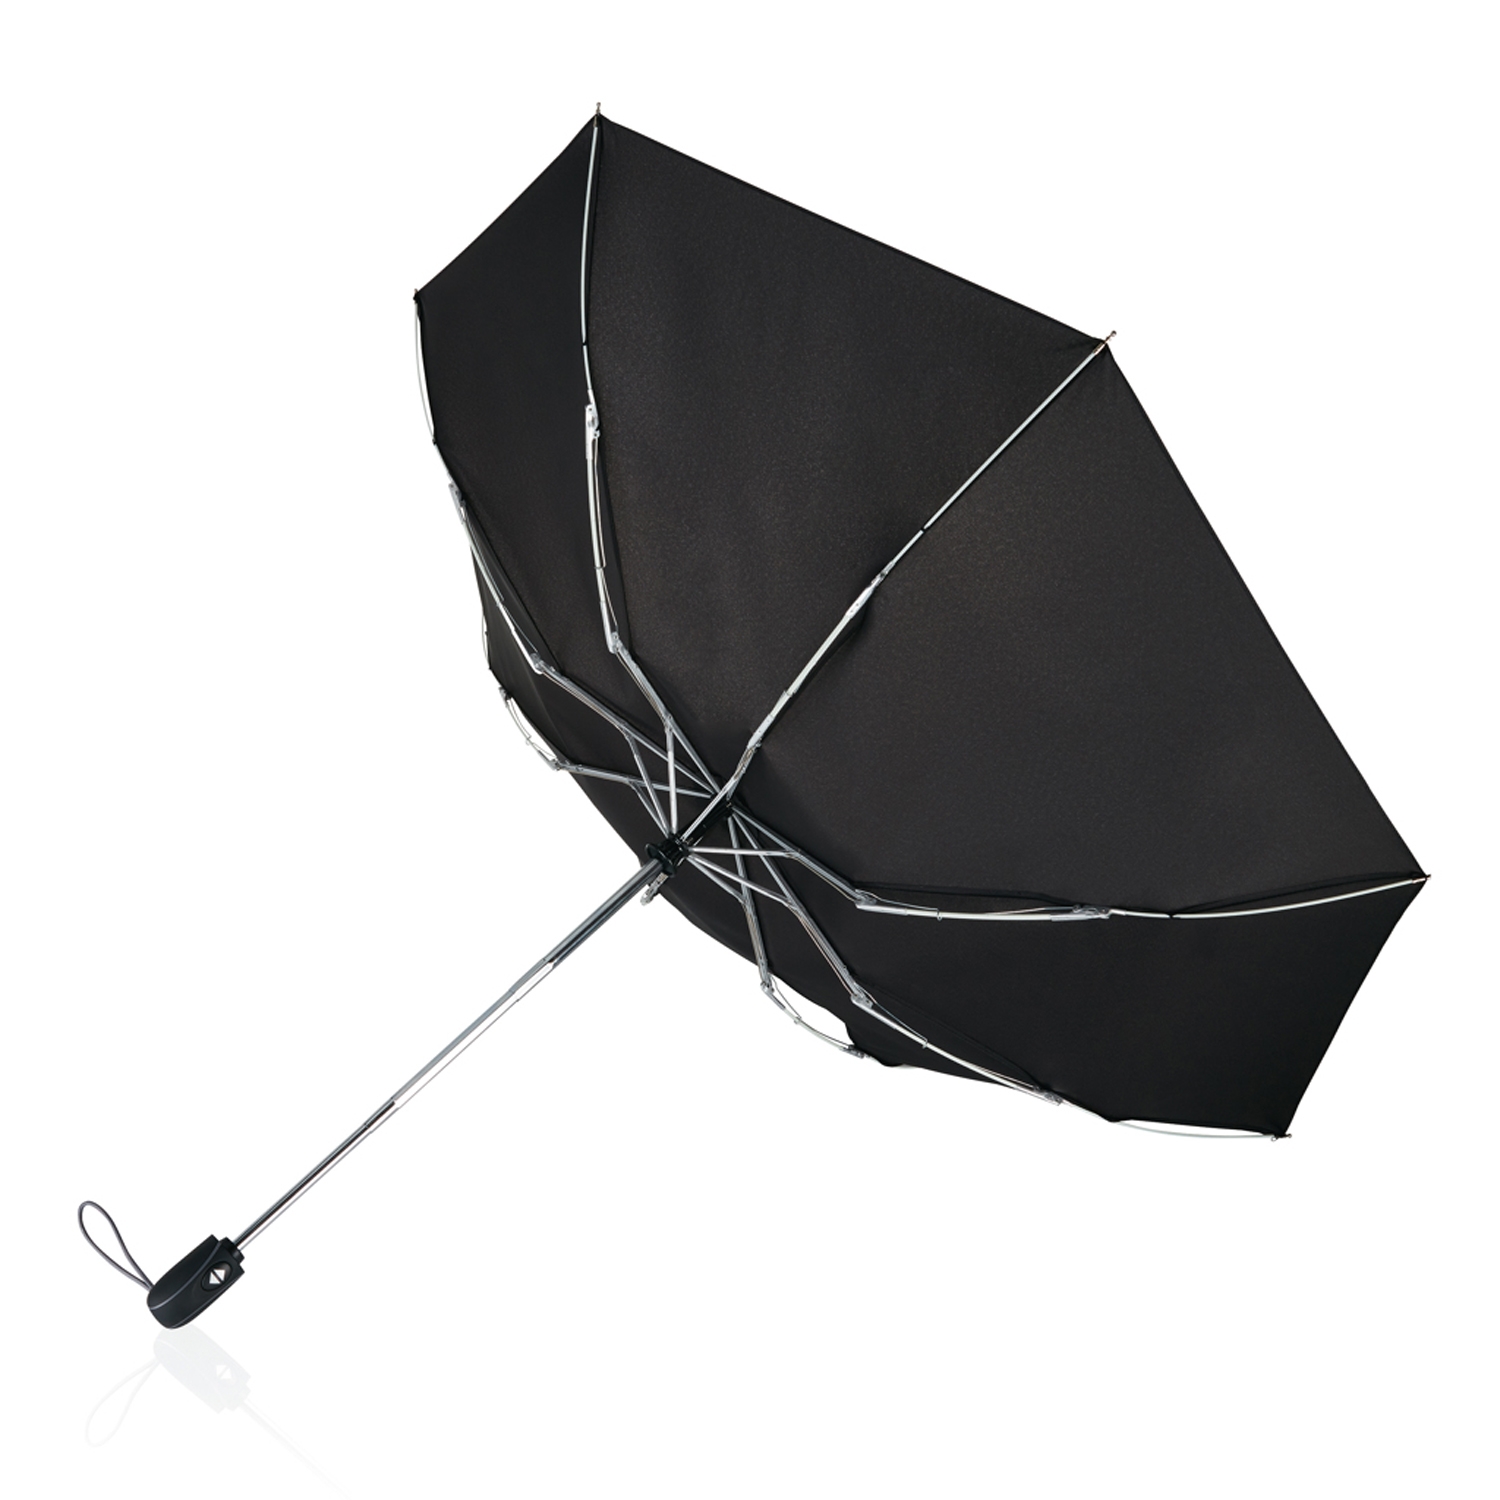 Swiss Peak зонт. Зонт складной «traveler». P850 зонт. Складной зонт черный | ZC Mabu. Зонтик ветер